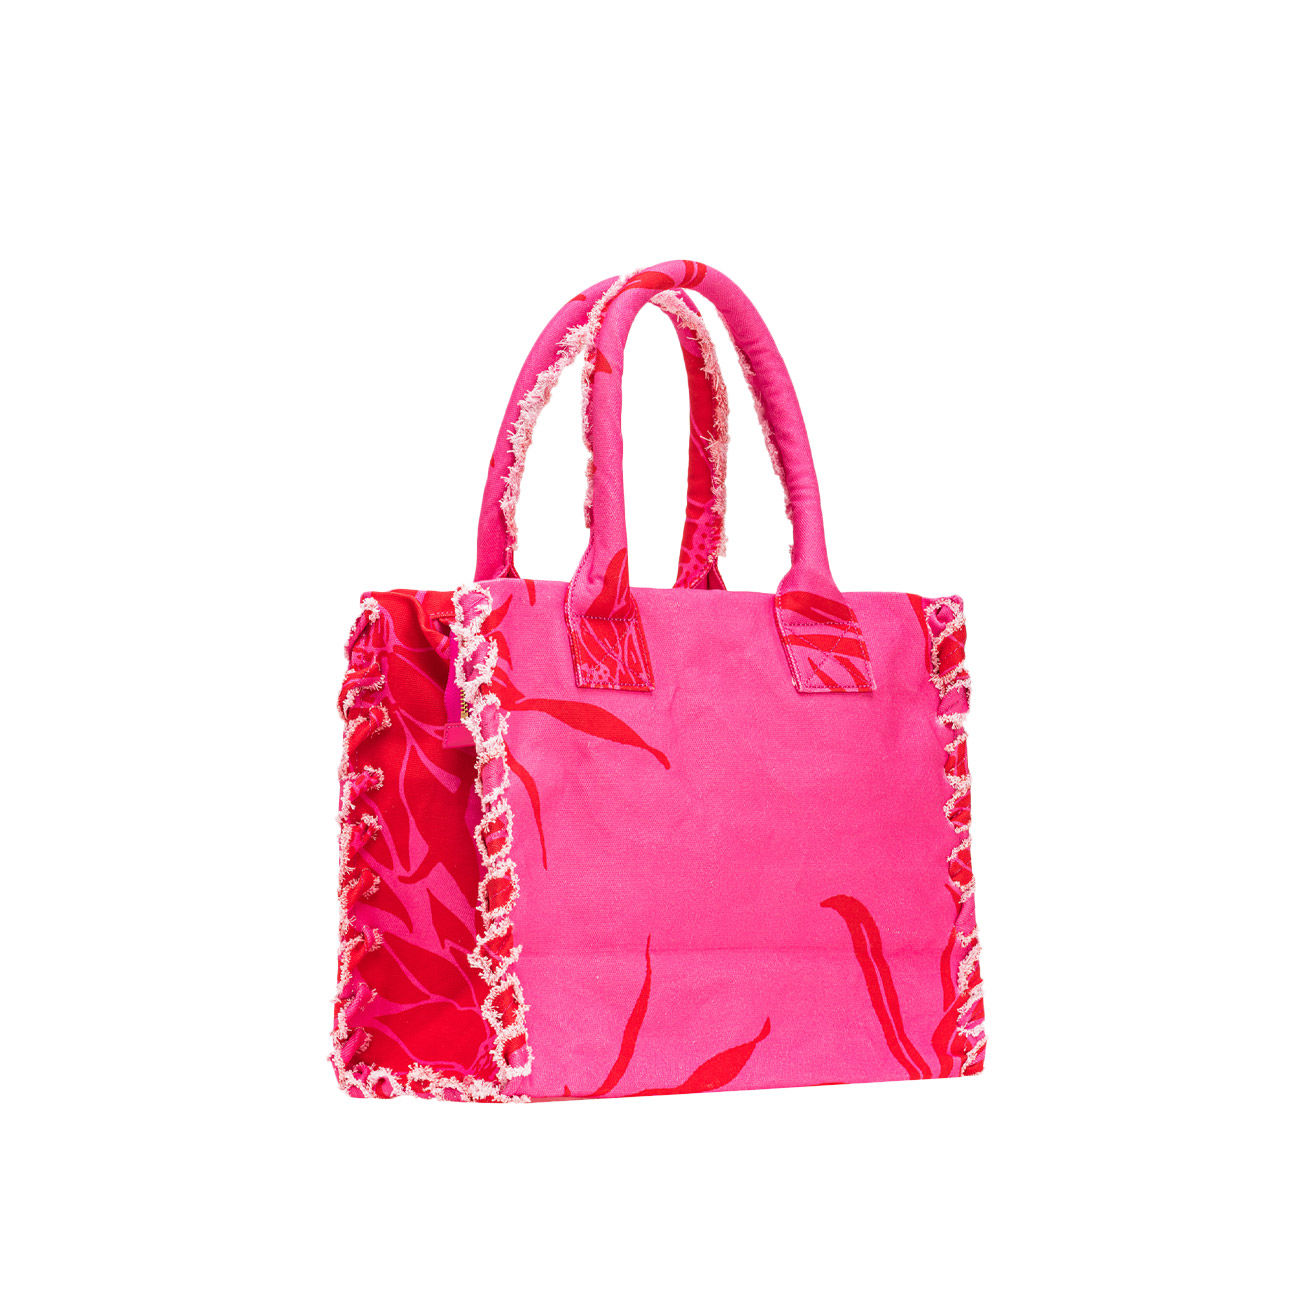 PINKO BAGS BAG BEACH SHOPPING CANVAS Red Pink